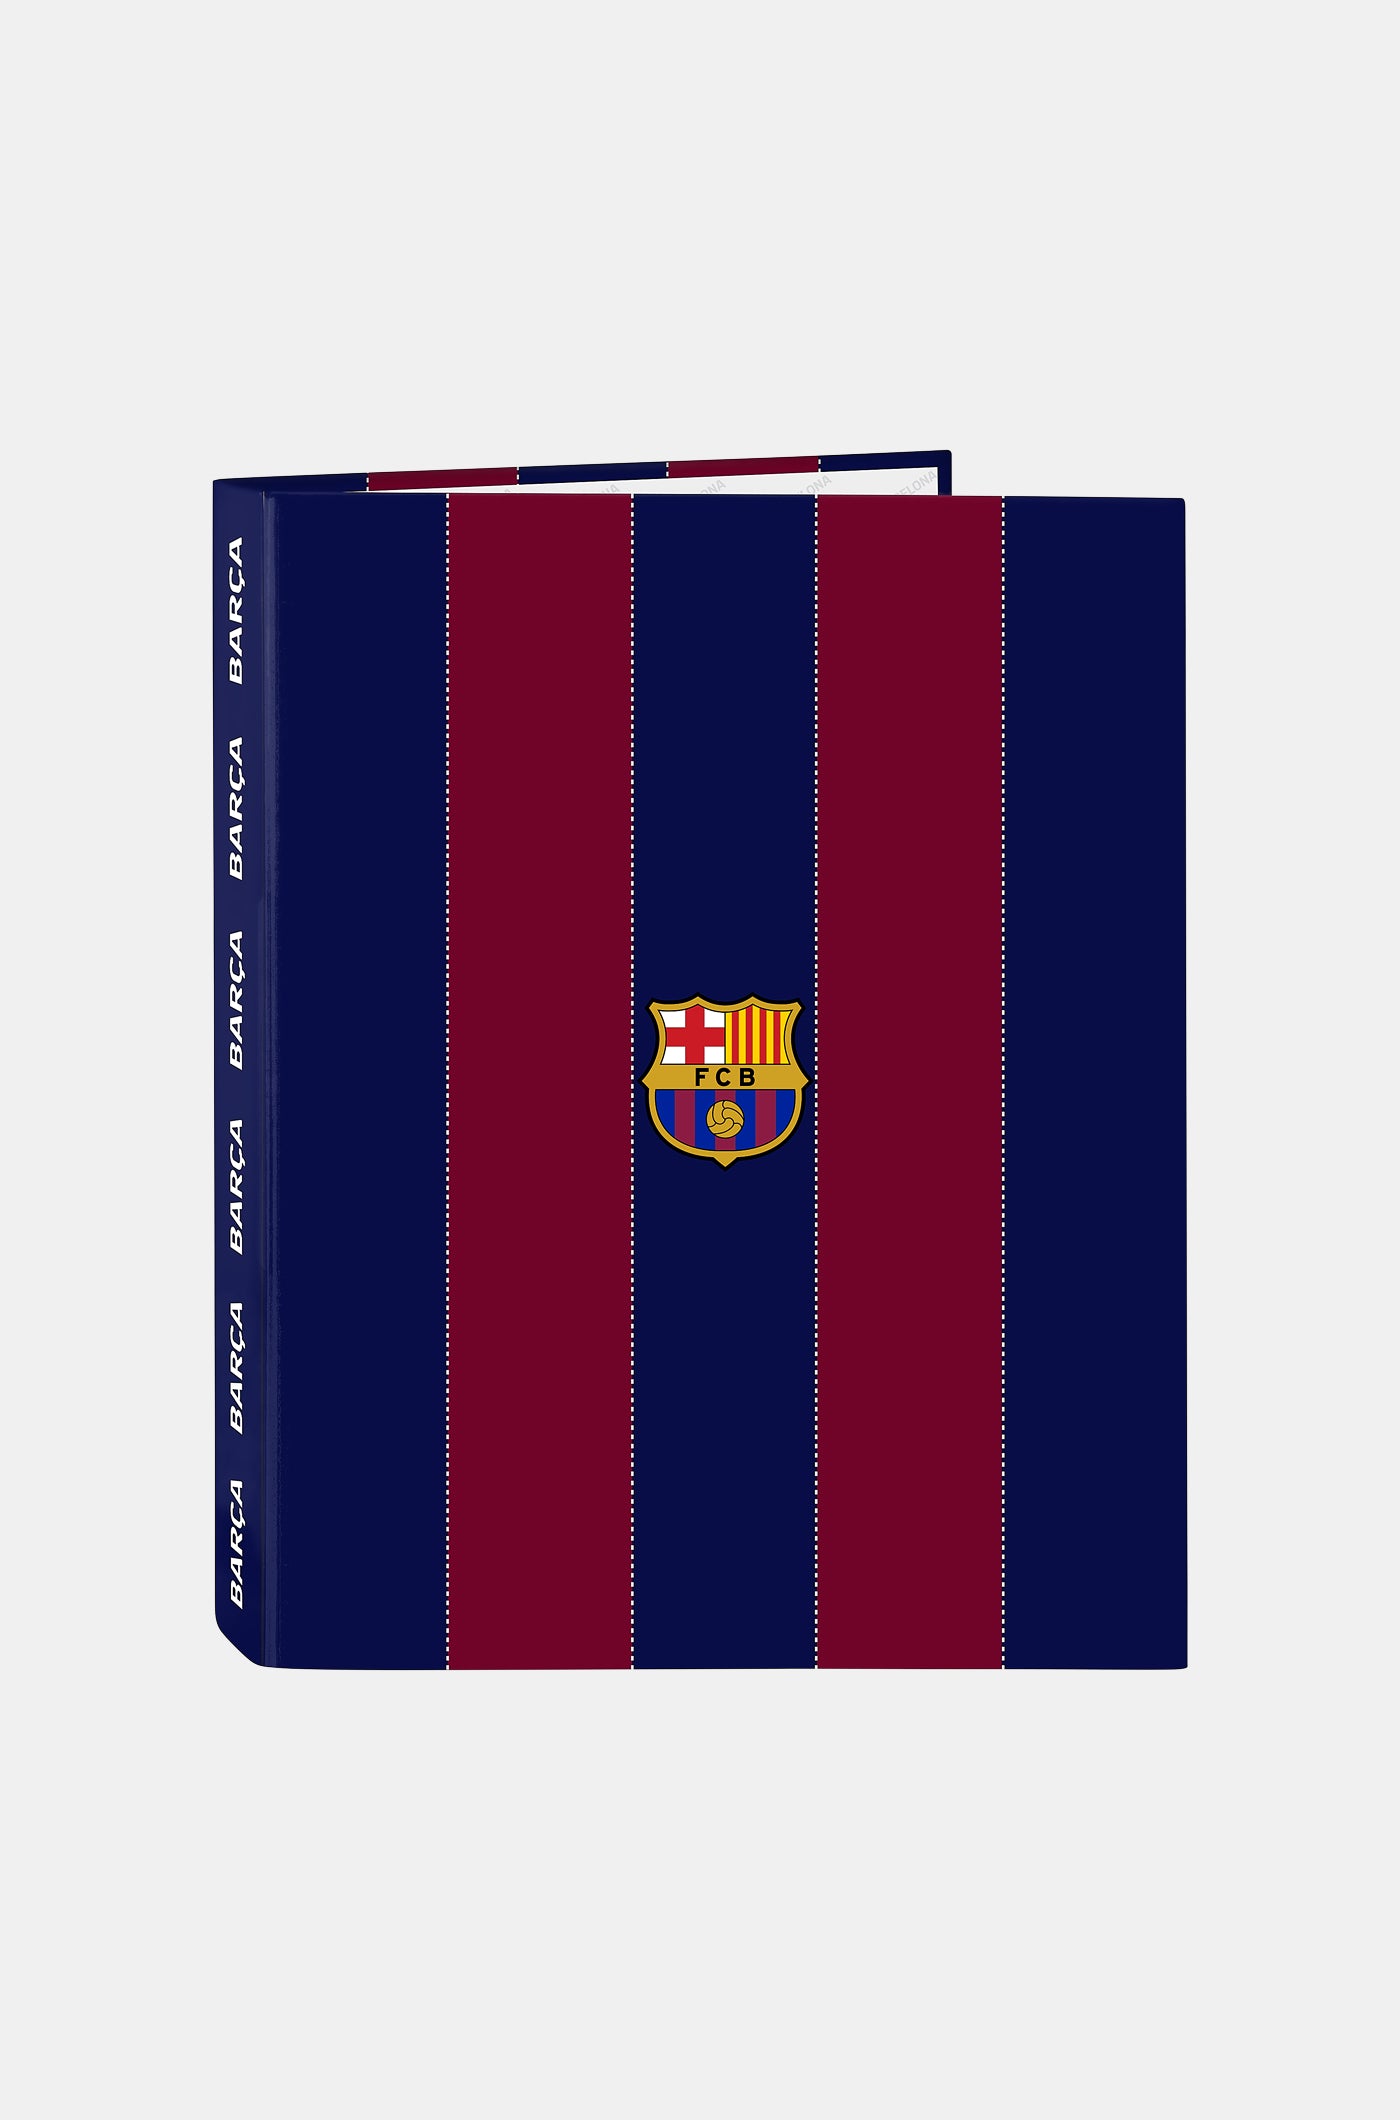 Equipment – Barça Official Store Spotify Camp Nou